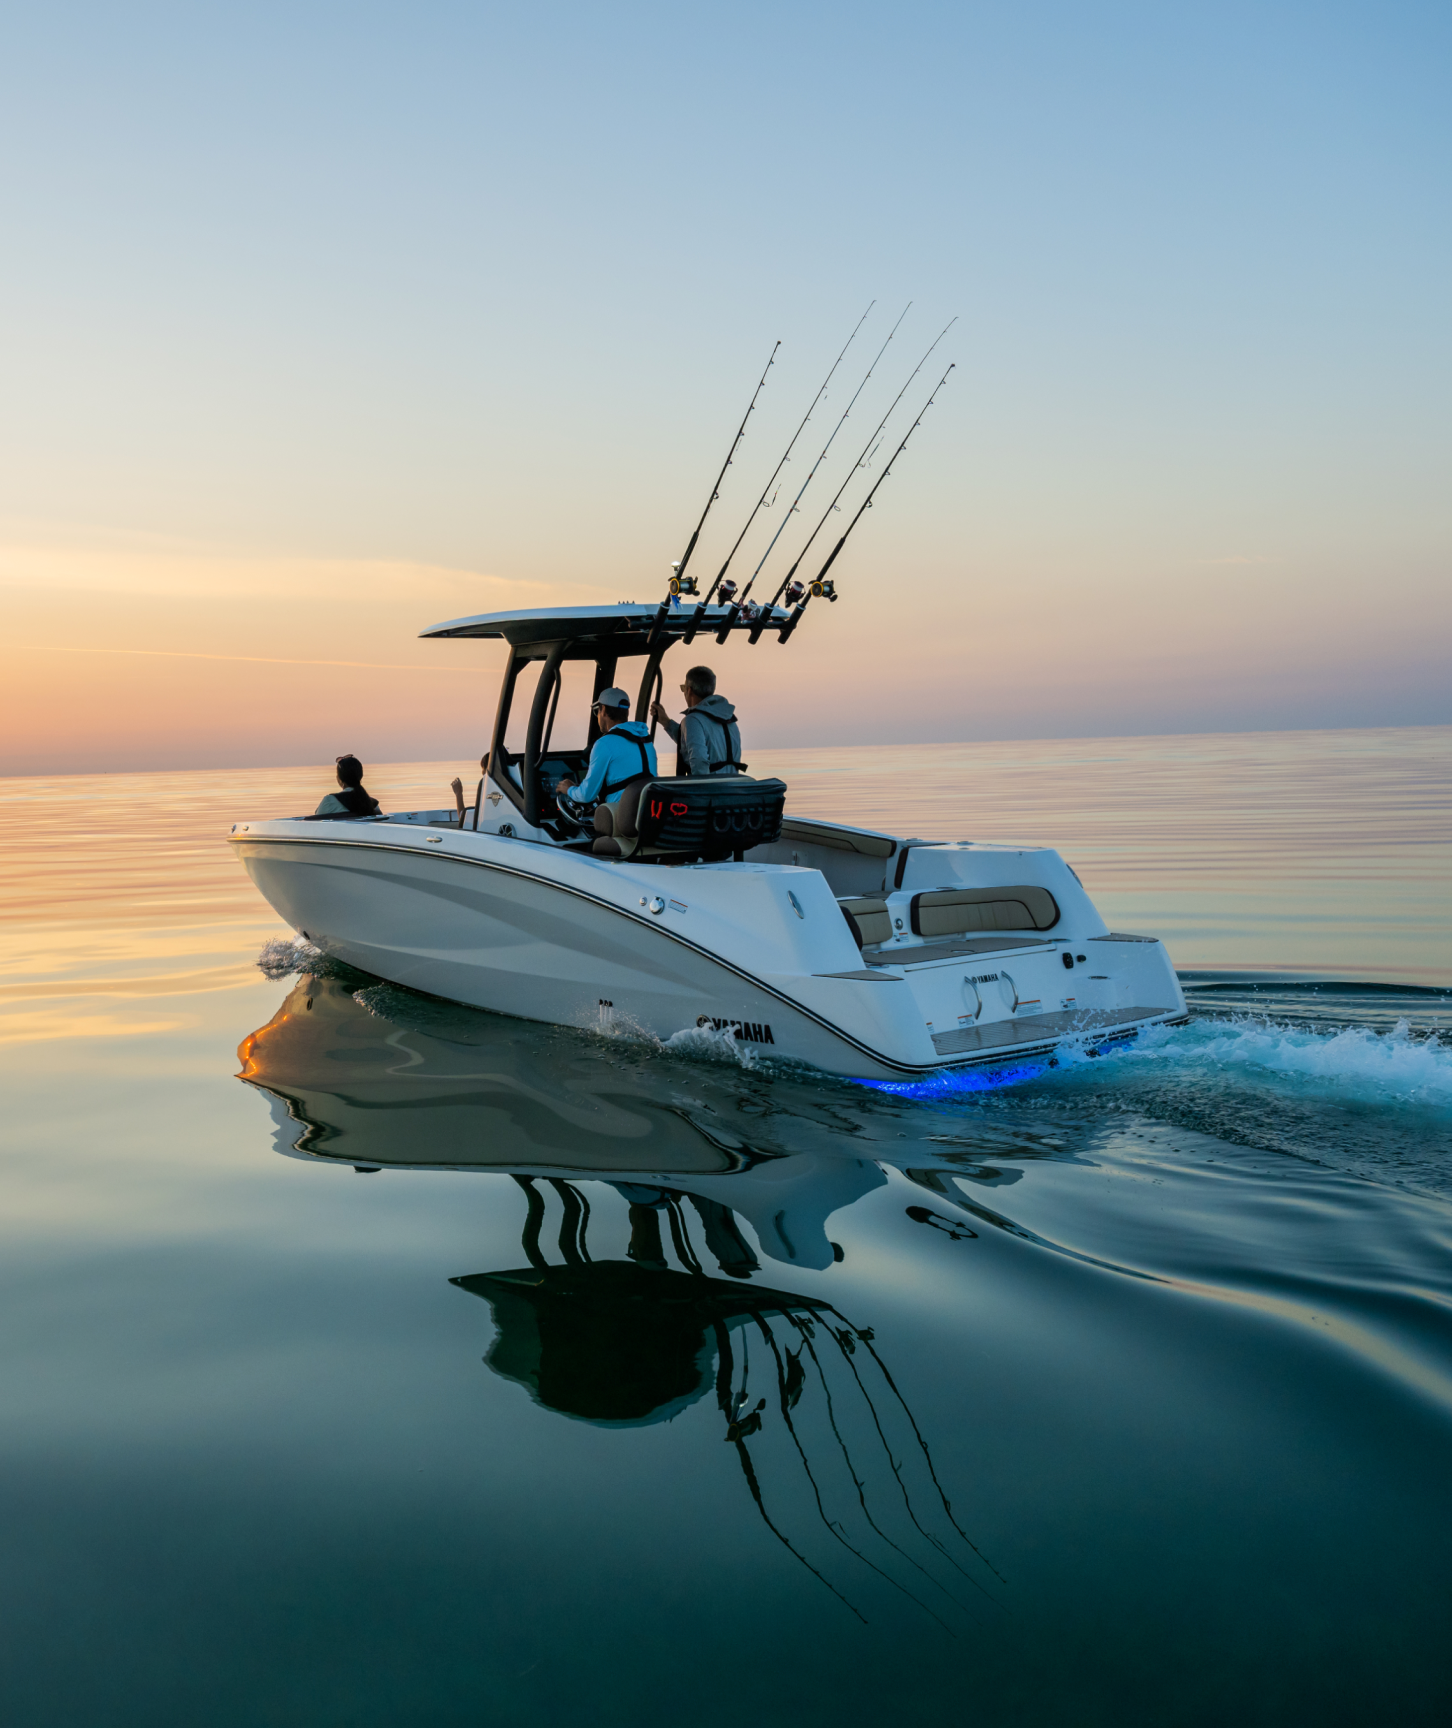 Yamaha Boats – The Worldwide Leader in Jet Boats